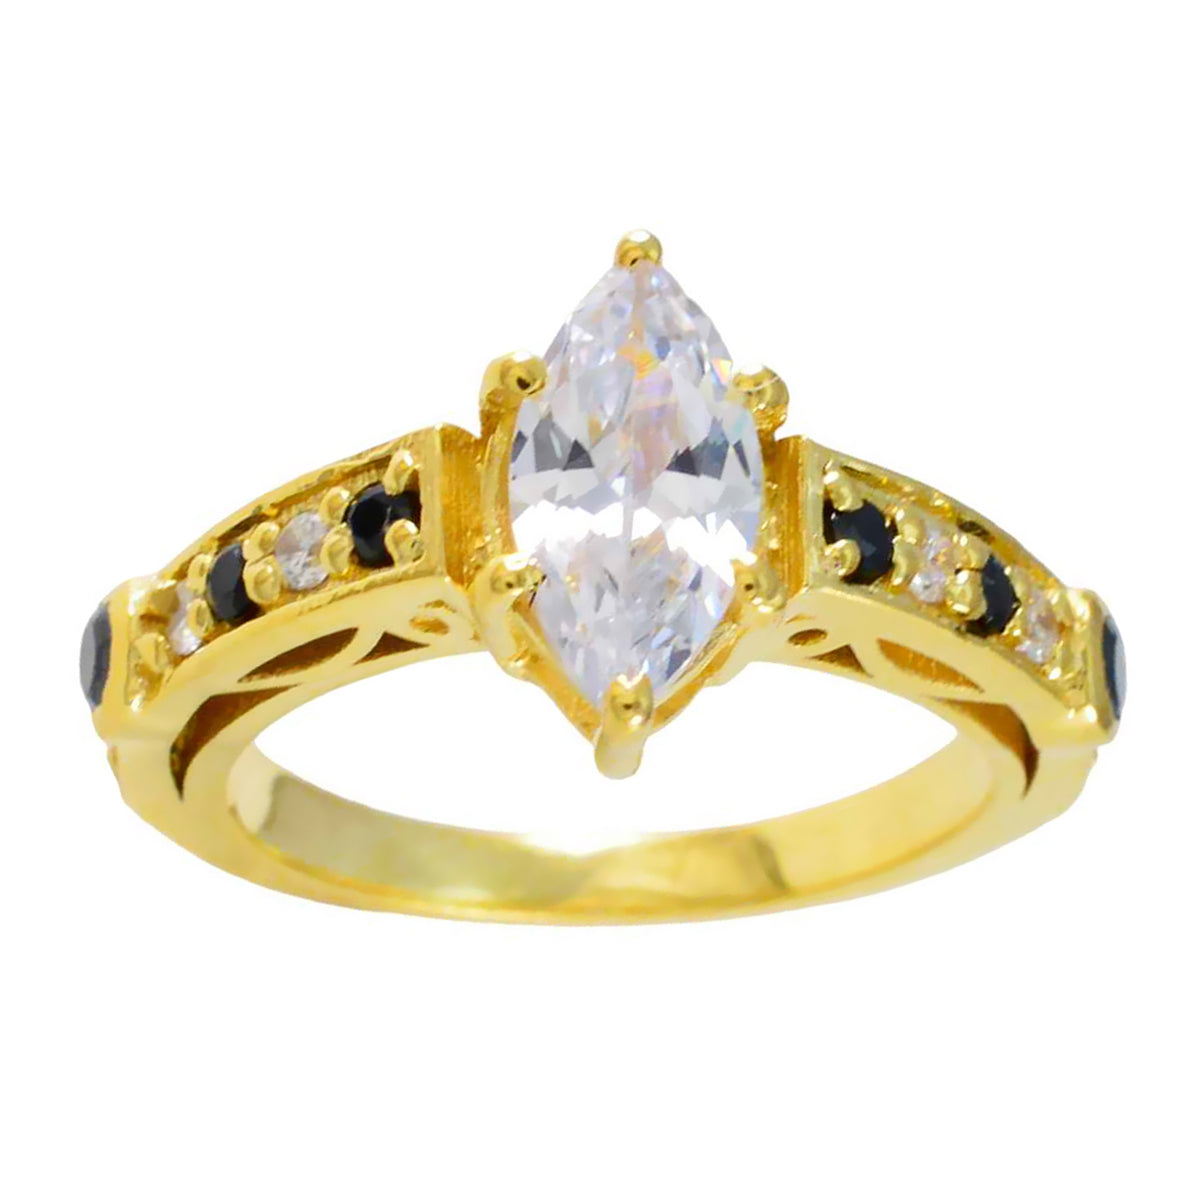 Riyo Supplies Silver Ring With Yellow Gold Plating Blue Sapphire Stone Marquise Shape Prong Setting Handamde Jewelry Graduation Ring